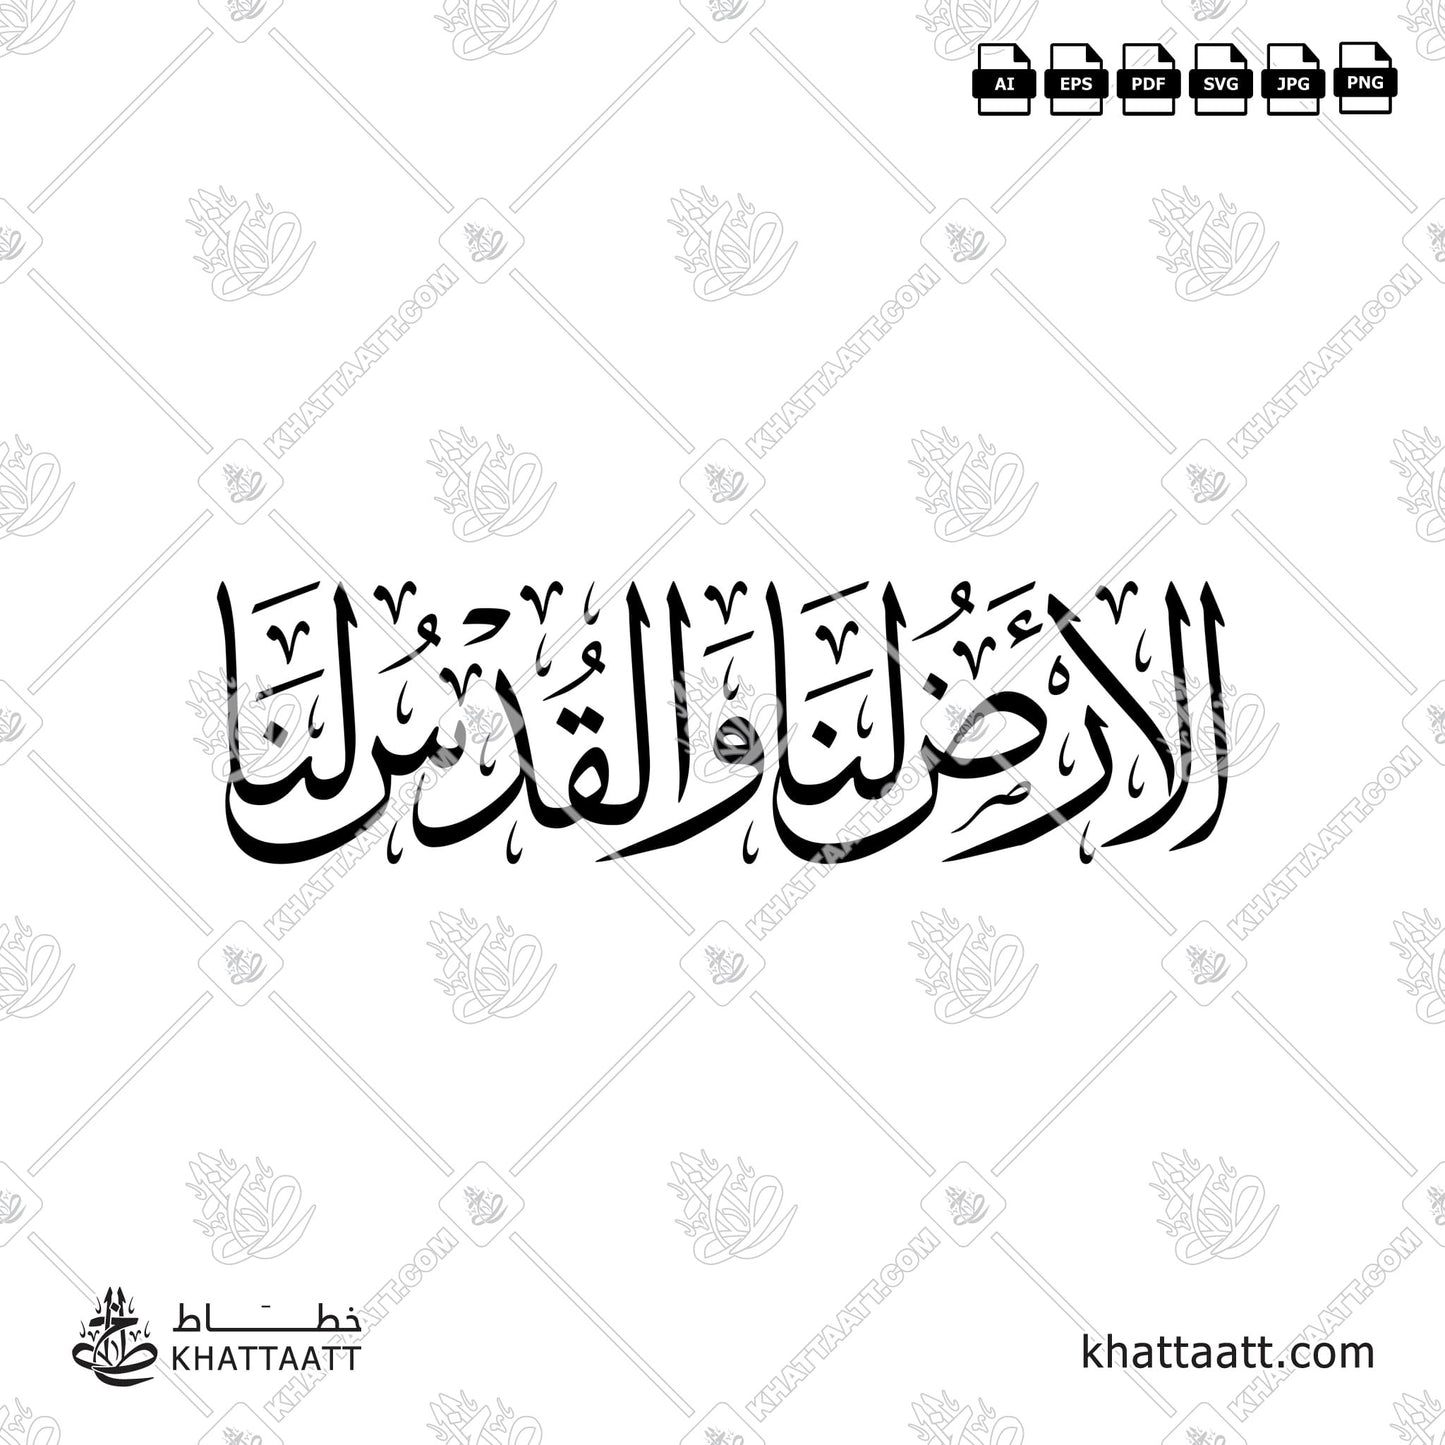 Arabic Calligraphy of الأرض لنا والقدس لنا in Thuluth Script خط الثلث.